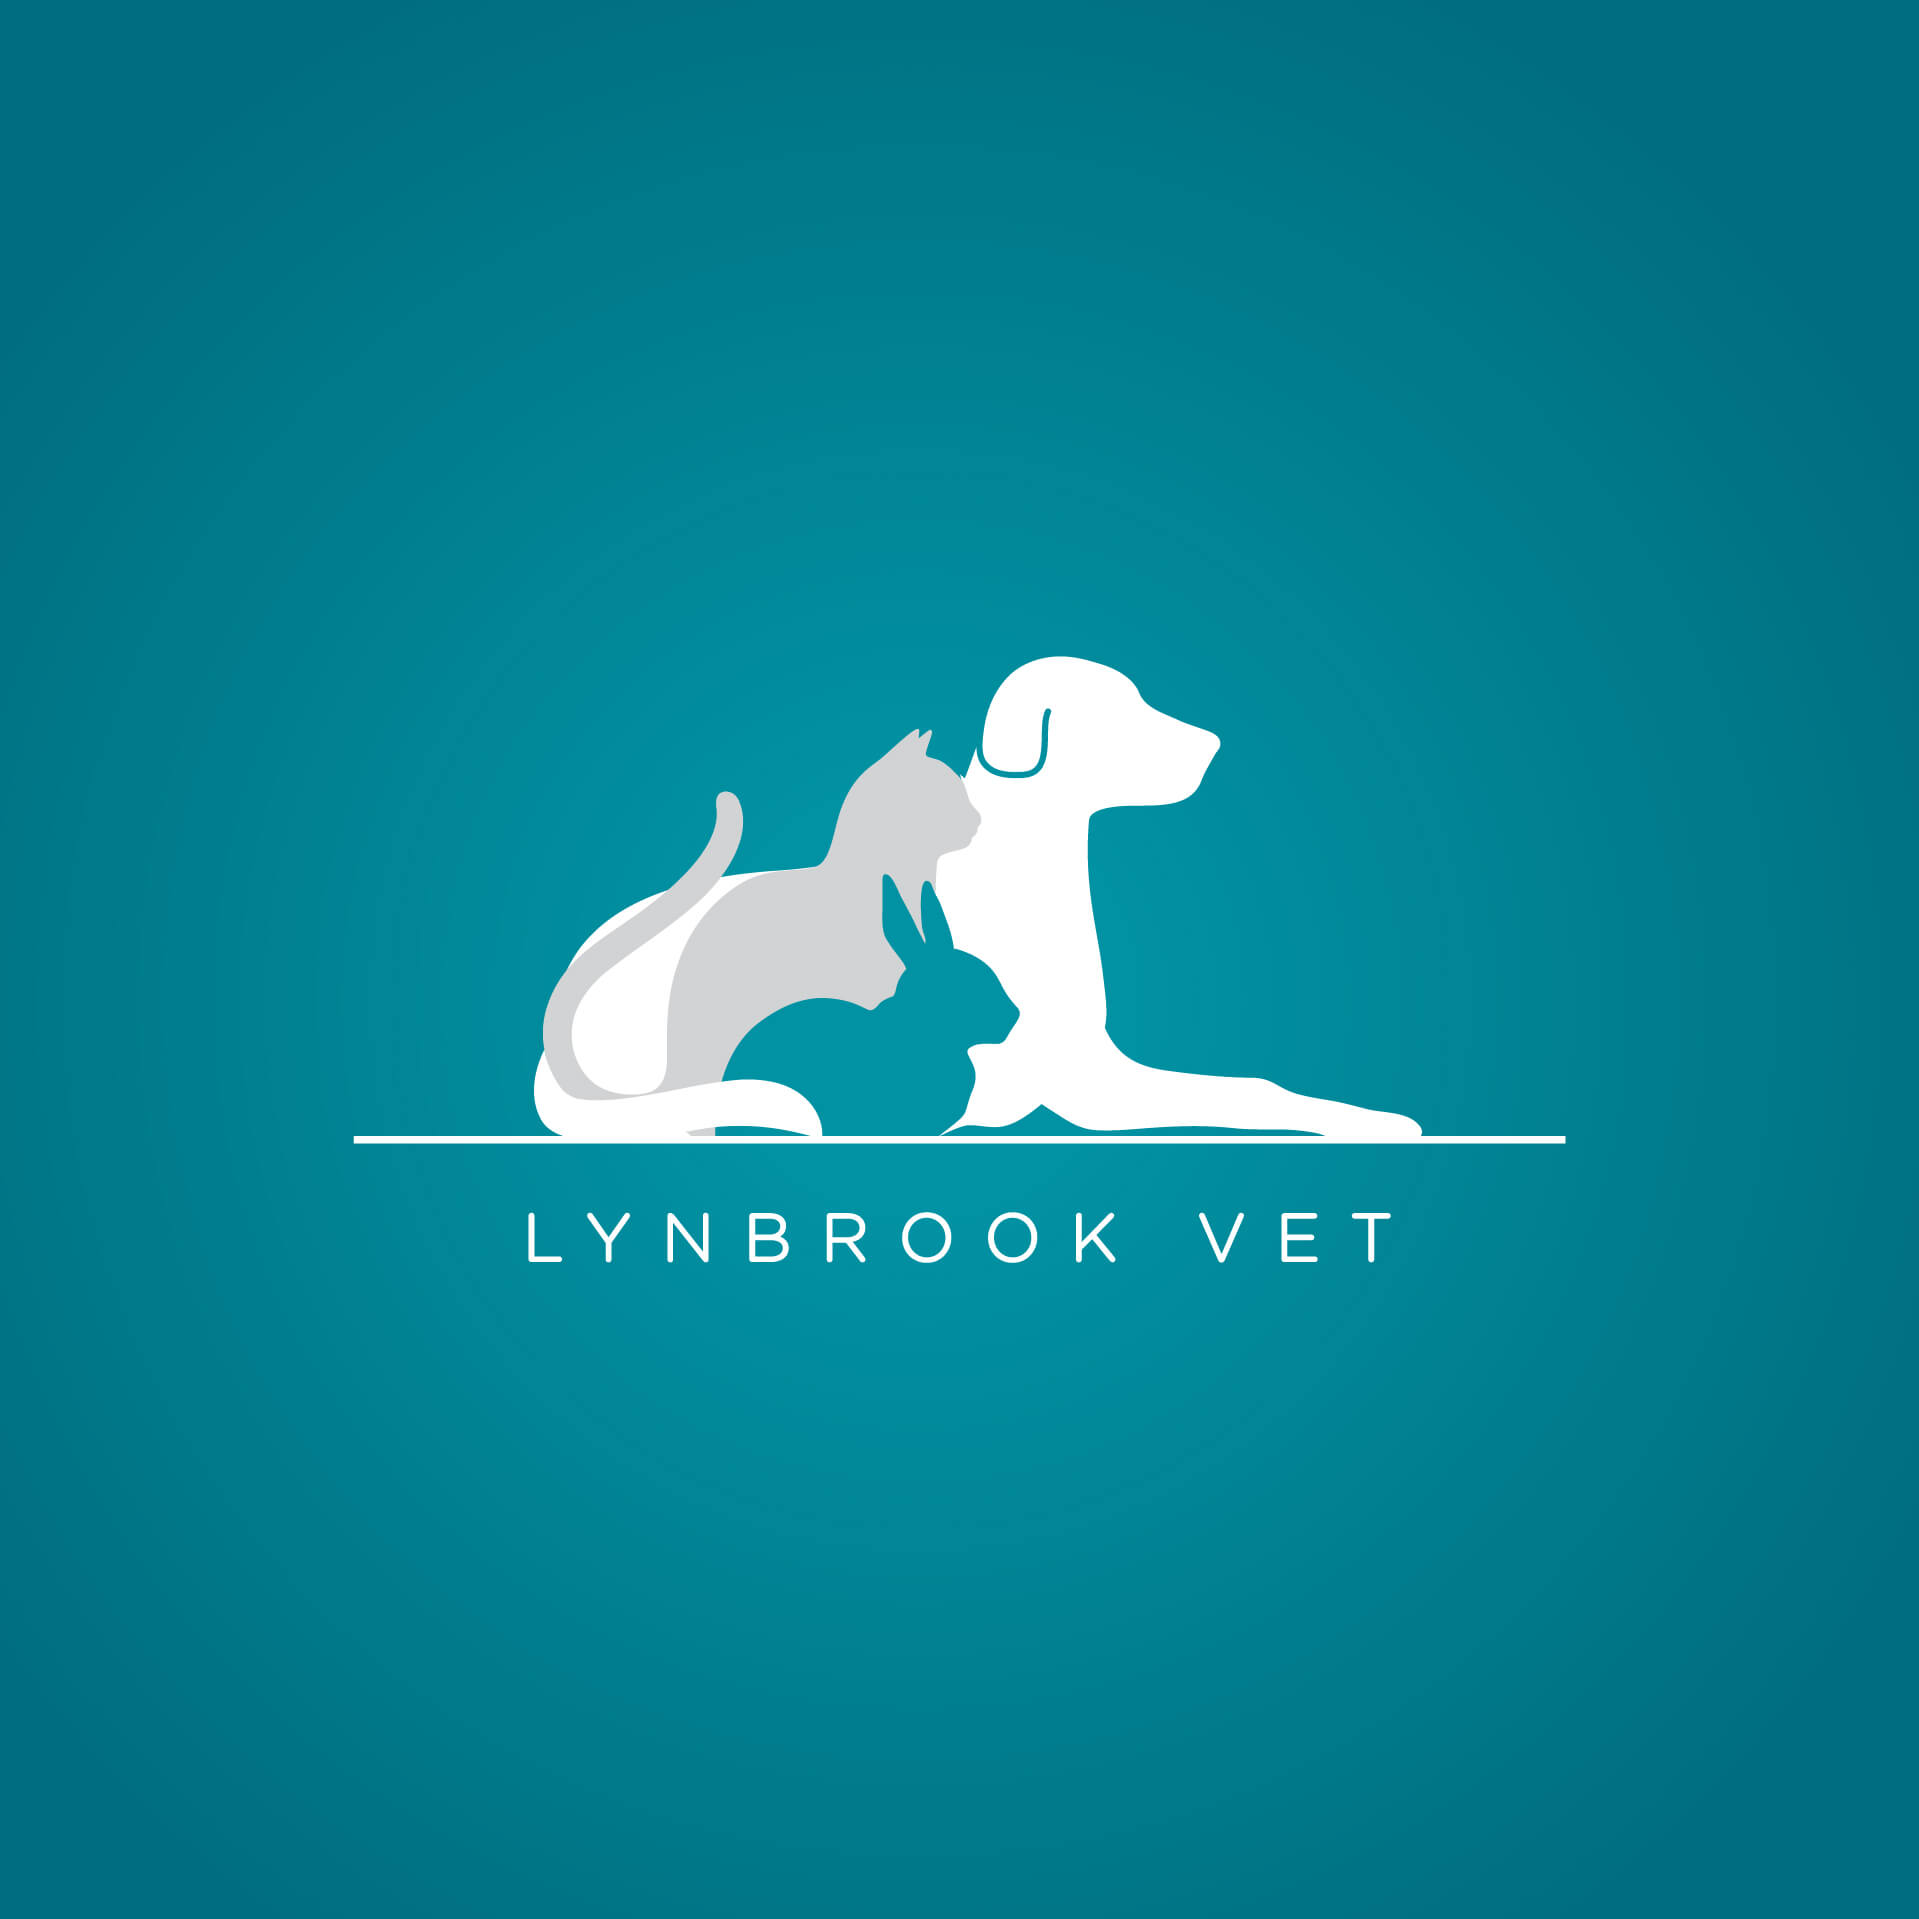 Lynbrook Vet: Veterinary Clinic and Consultation in Lynbrook, VIC